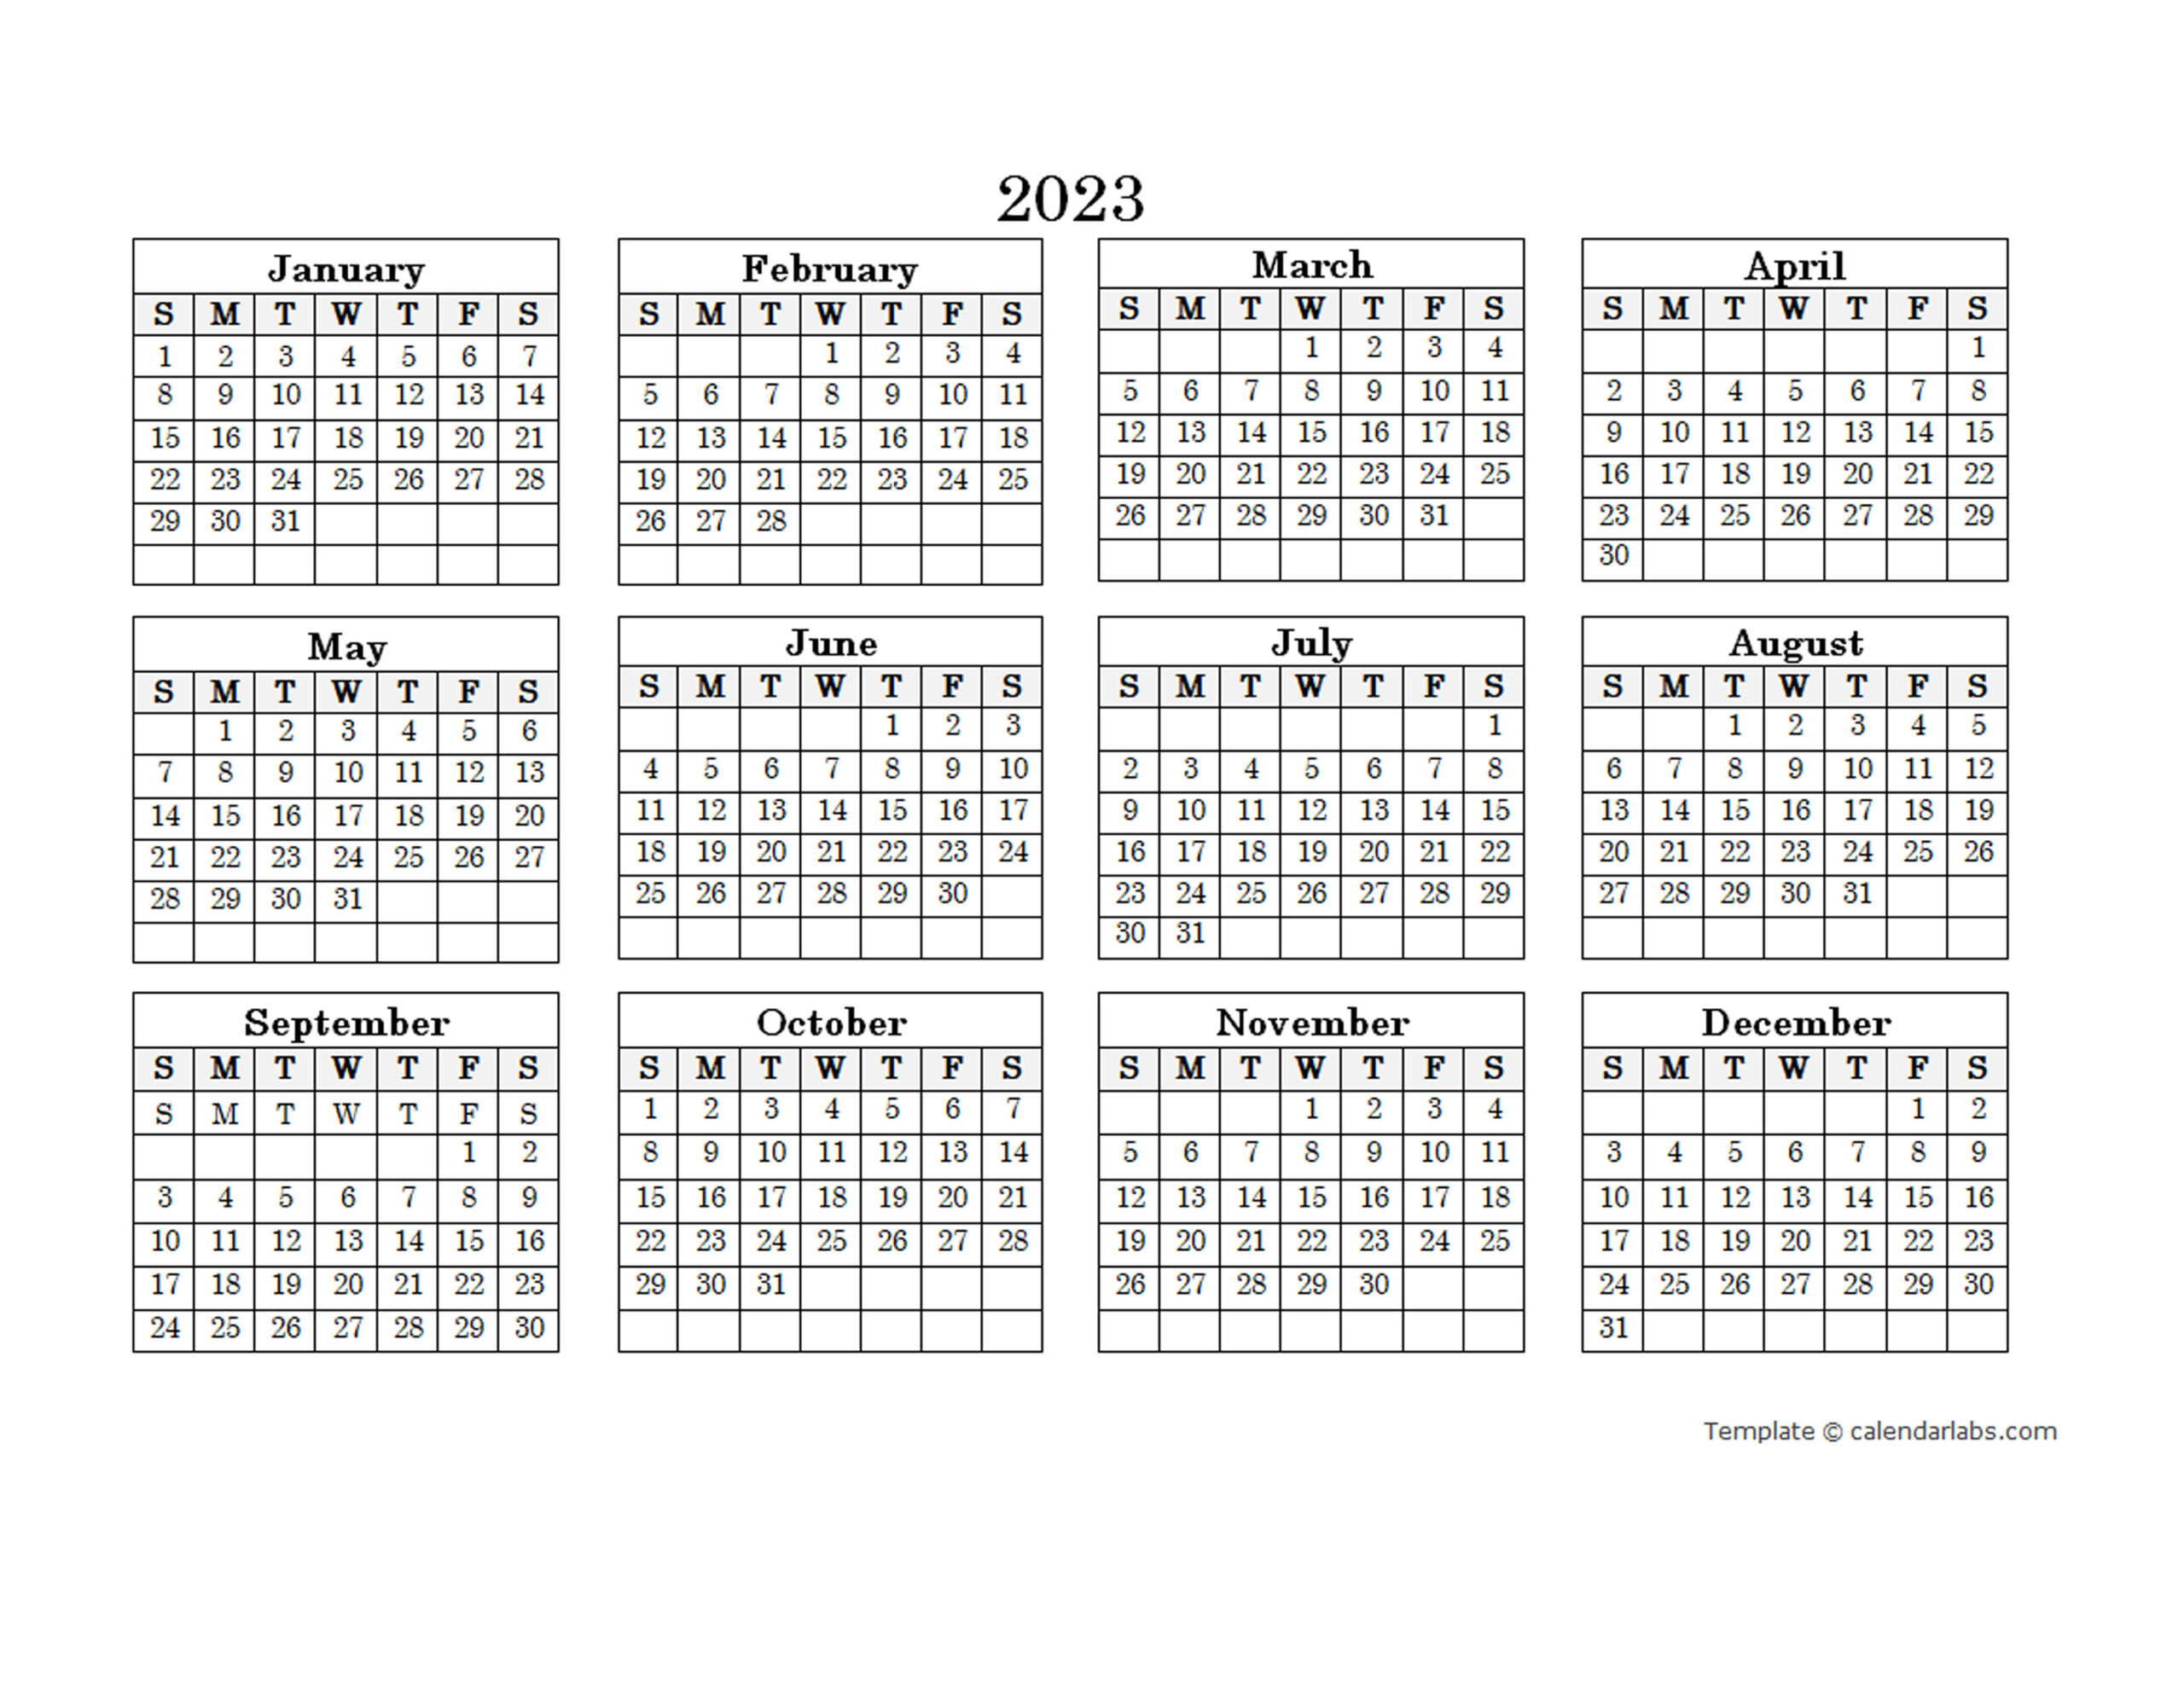 printable-calendar-2023-2024-year-at-a-glance-calendar-etsy-yearly